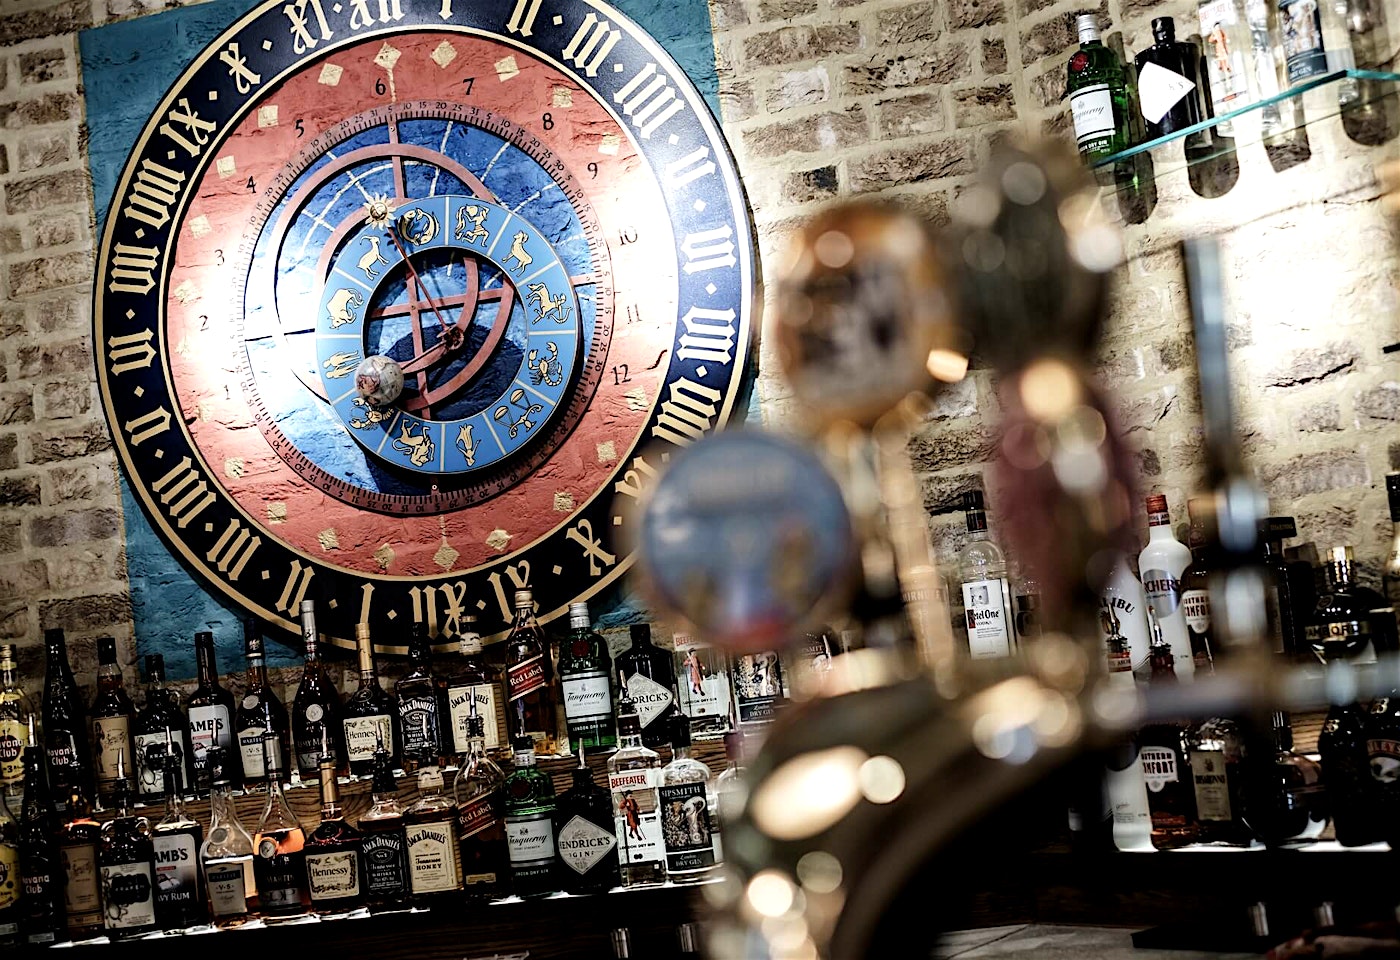 The bar inside The Astronomer, a pub near Liverpool Street station